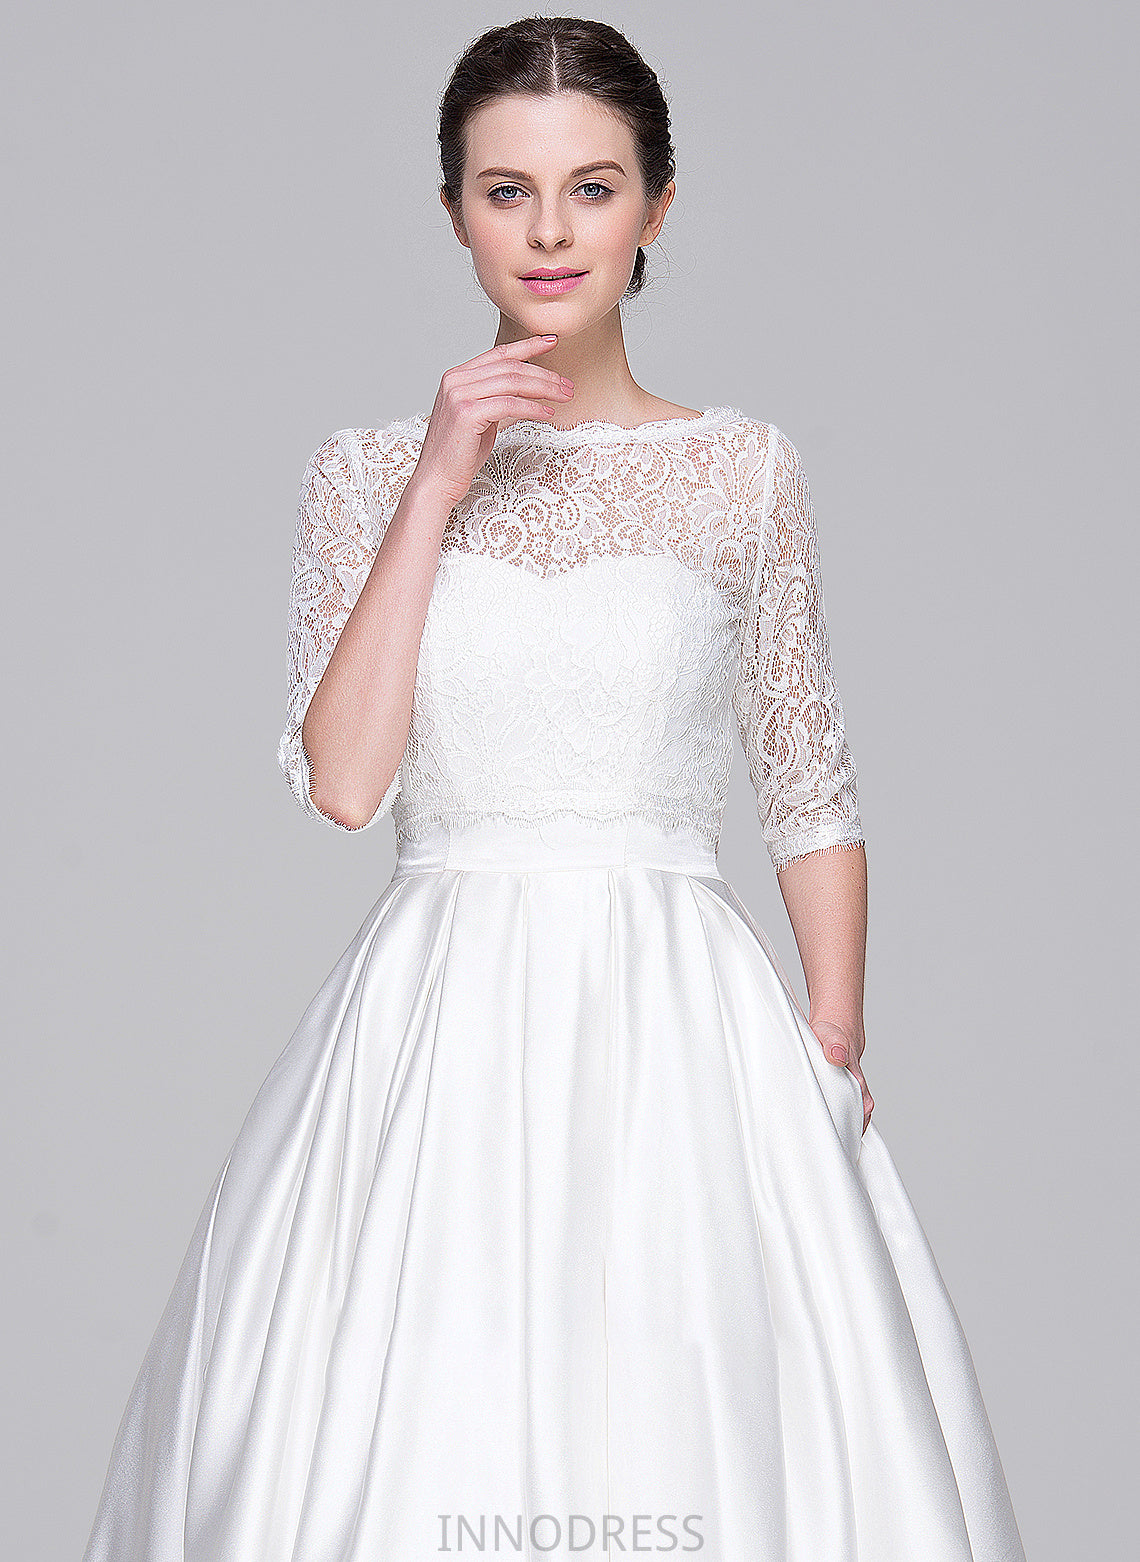 Dress Wedding Pockets With Ball-Gown/Princess Satin Anabel Tea-Length Sweetheart Wedding Dresses